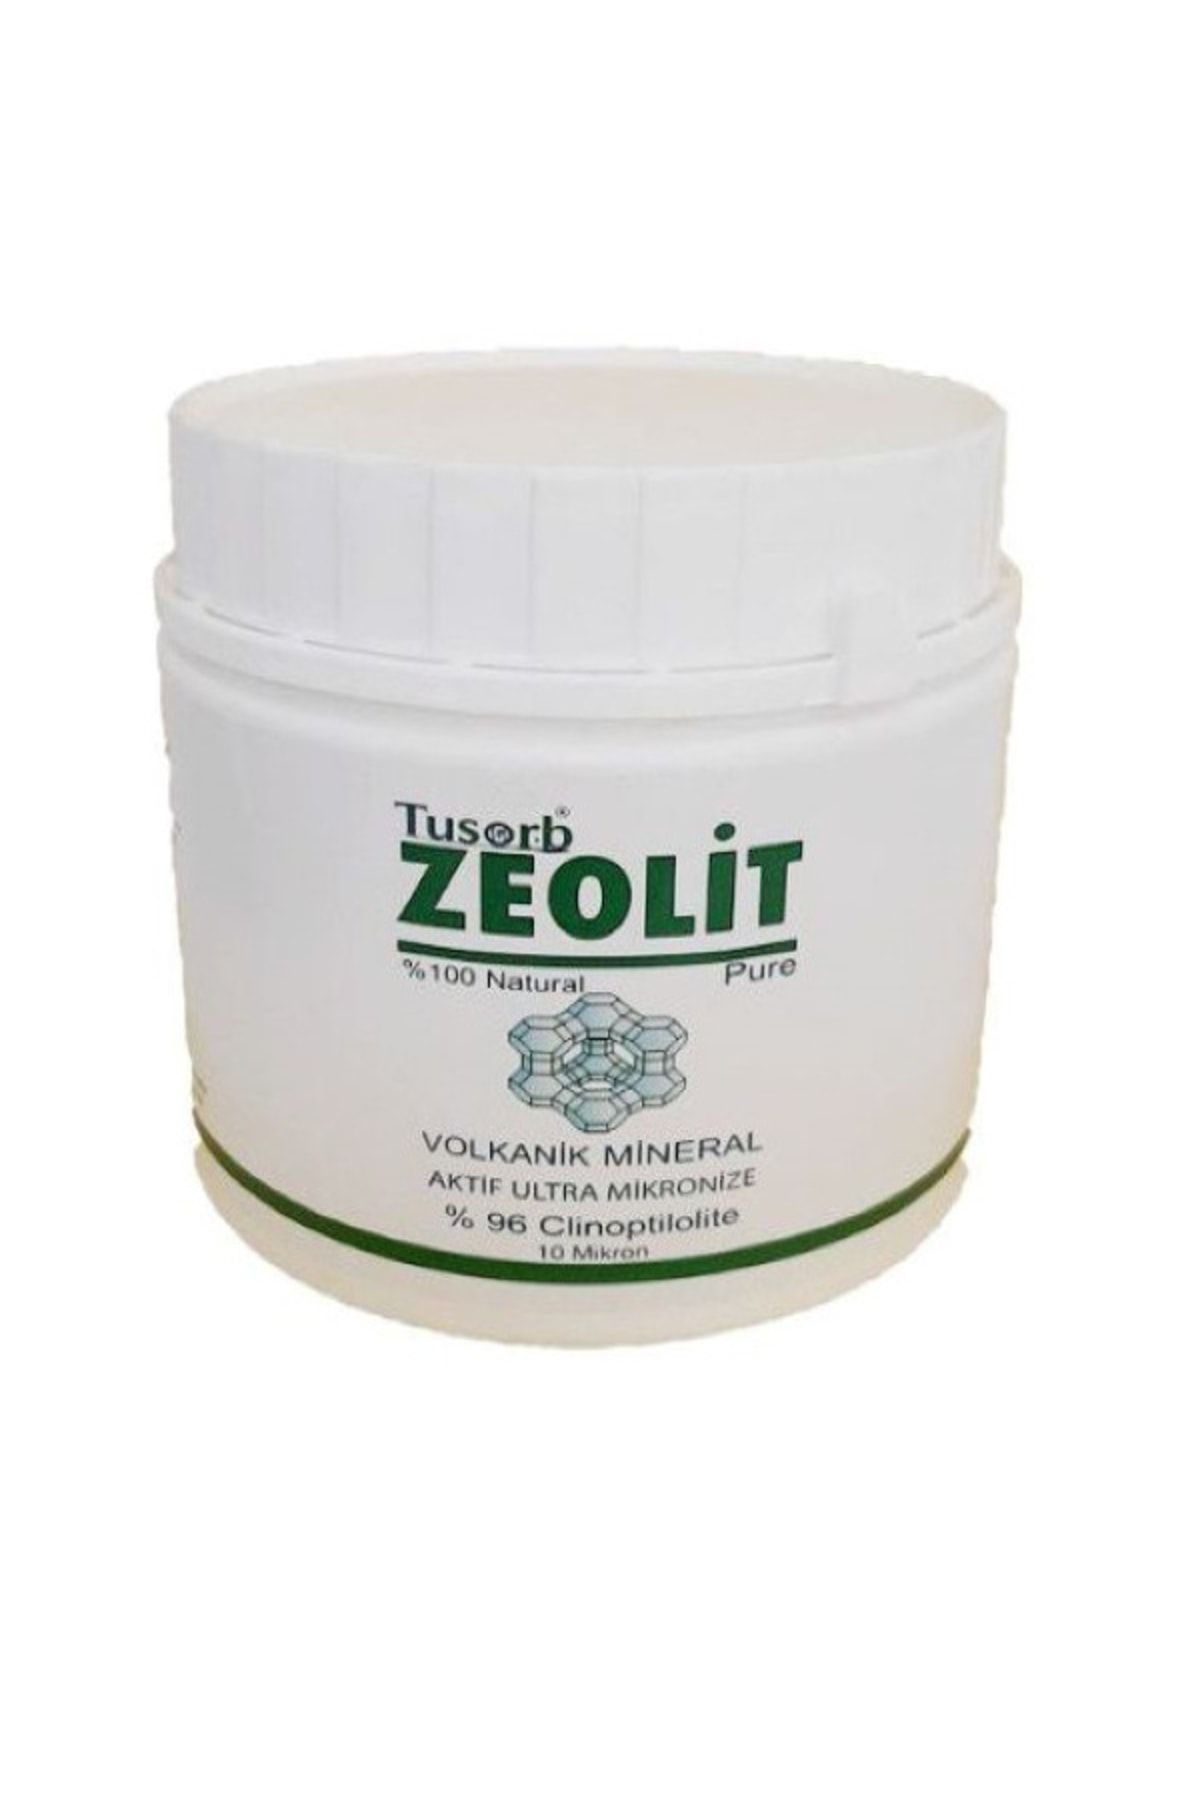 Tusorb Zeolit Klinoptilolit Aktif Ultra Mikronize Toz 10 Mikron